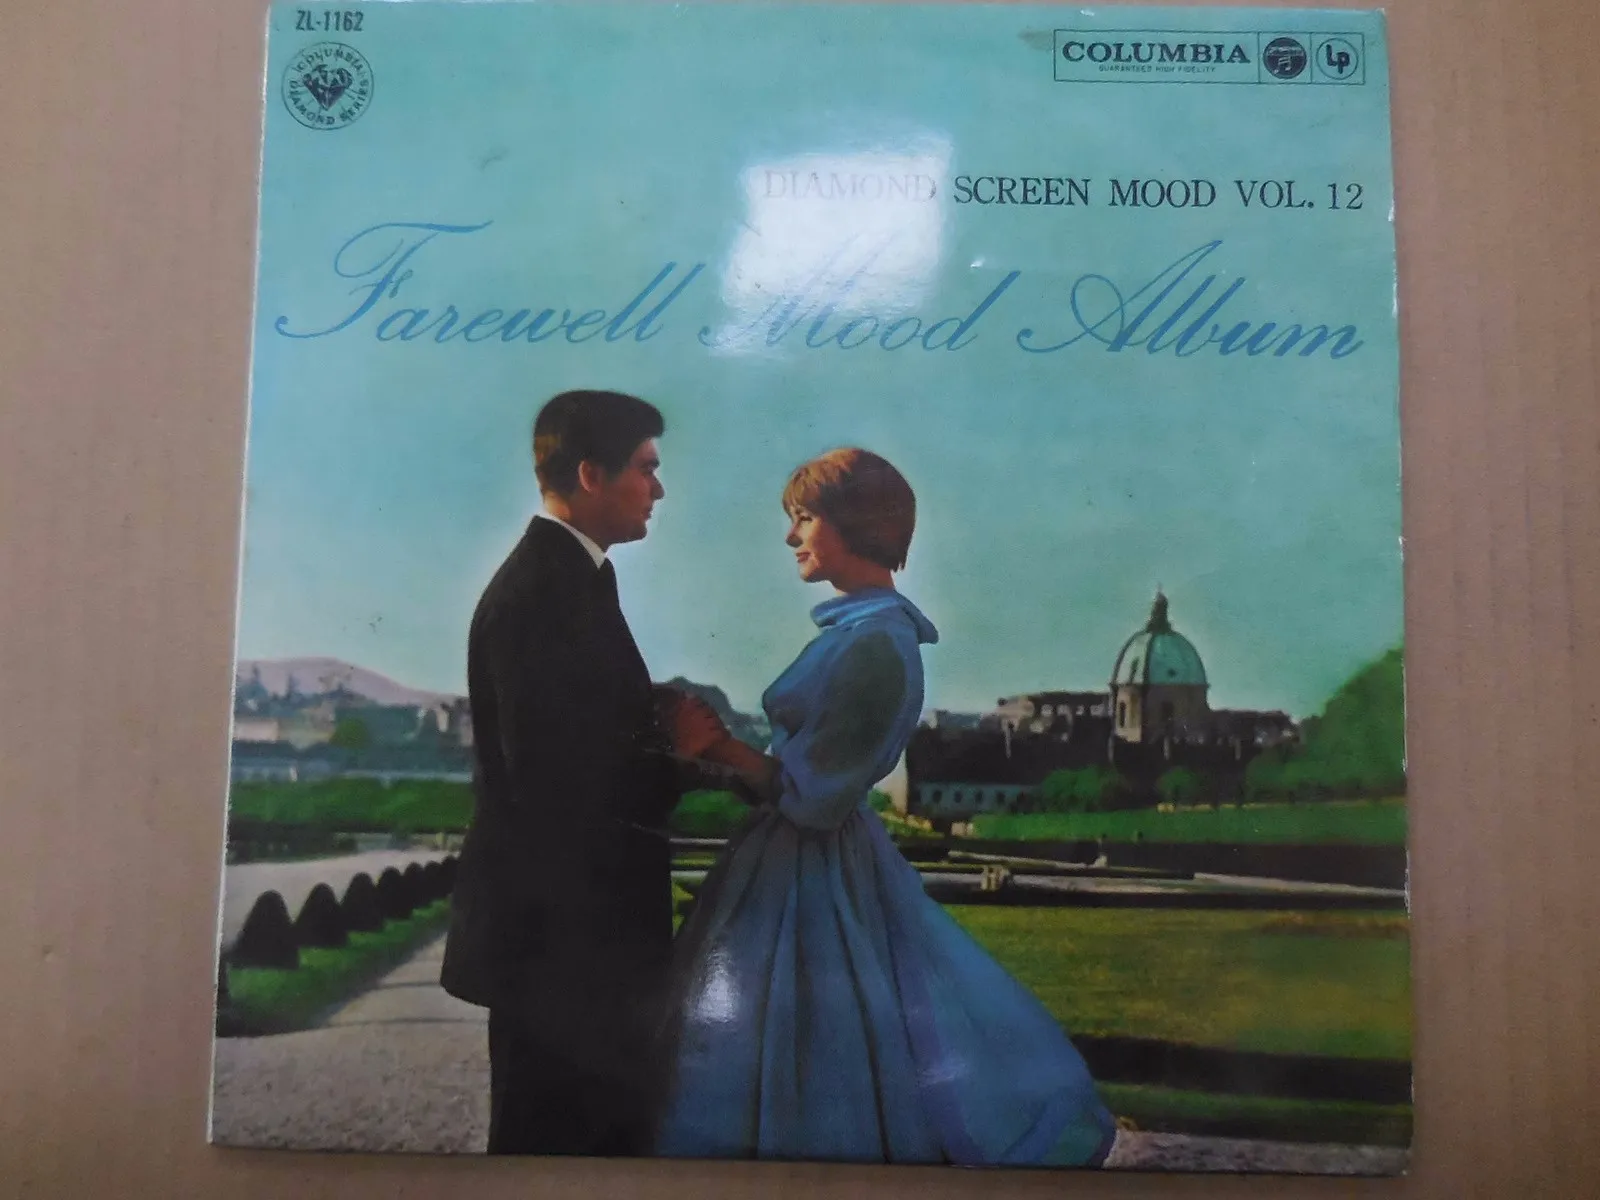 old-used-10-polegada-25cm-old-vinyl-records-lp-disc-diamond-screen-mood-vol12-europa-america-classico-filme-trilha-sonora-musicas